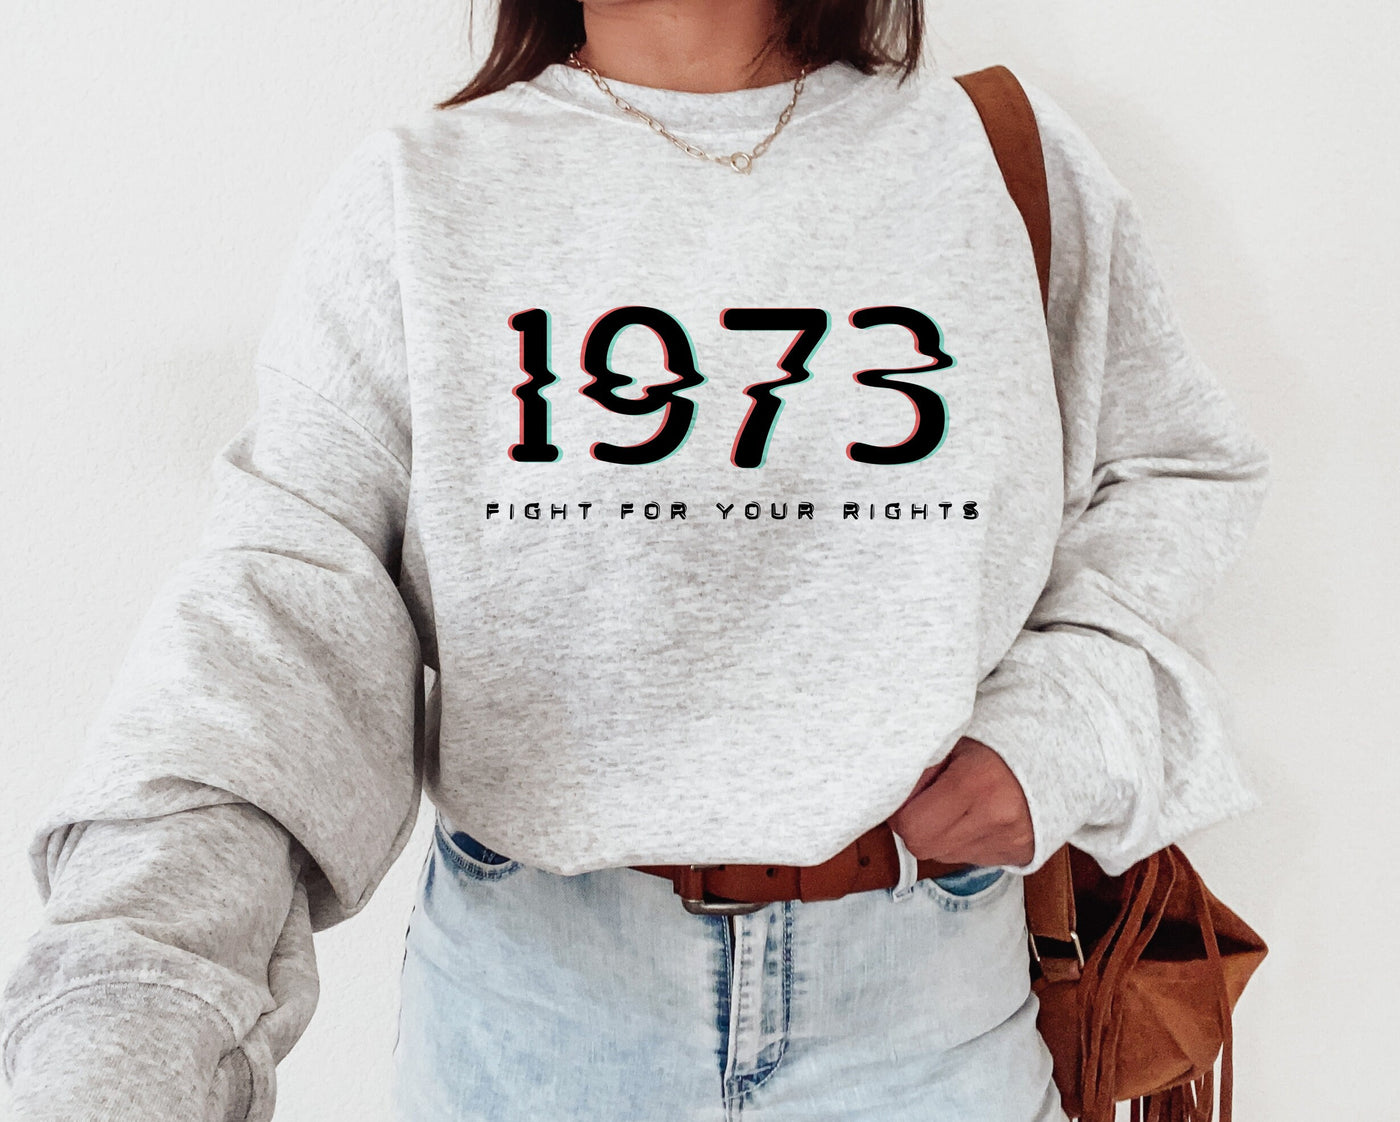 Pro Roe Shirt, Pro Choice Shirt, Activist Shirts, Reproductive Rights, Women's Rights Shirt, Women's Empowerment Shirt, Feminist Shirt, 1973